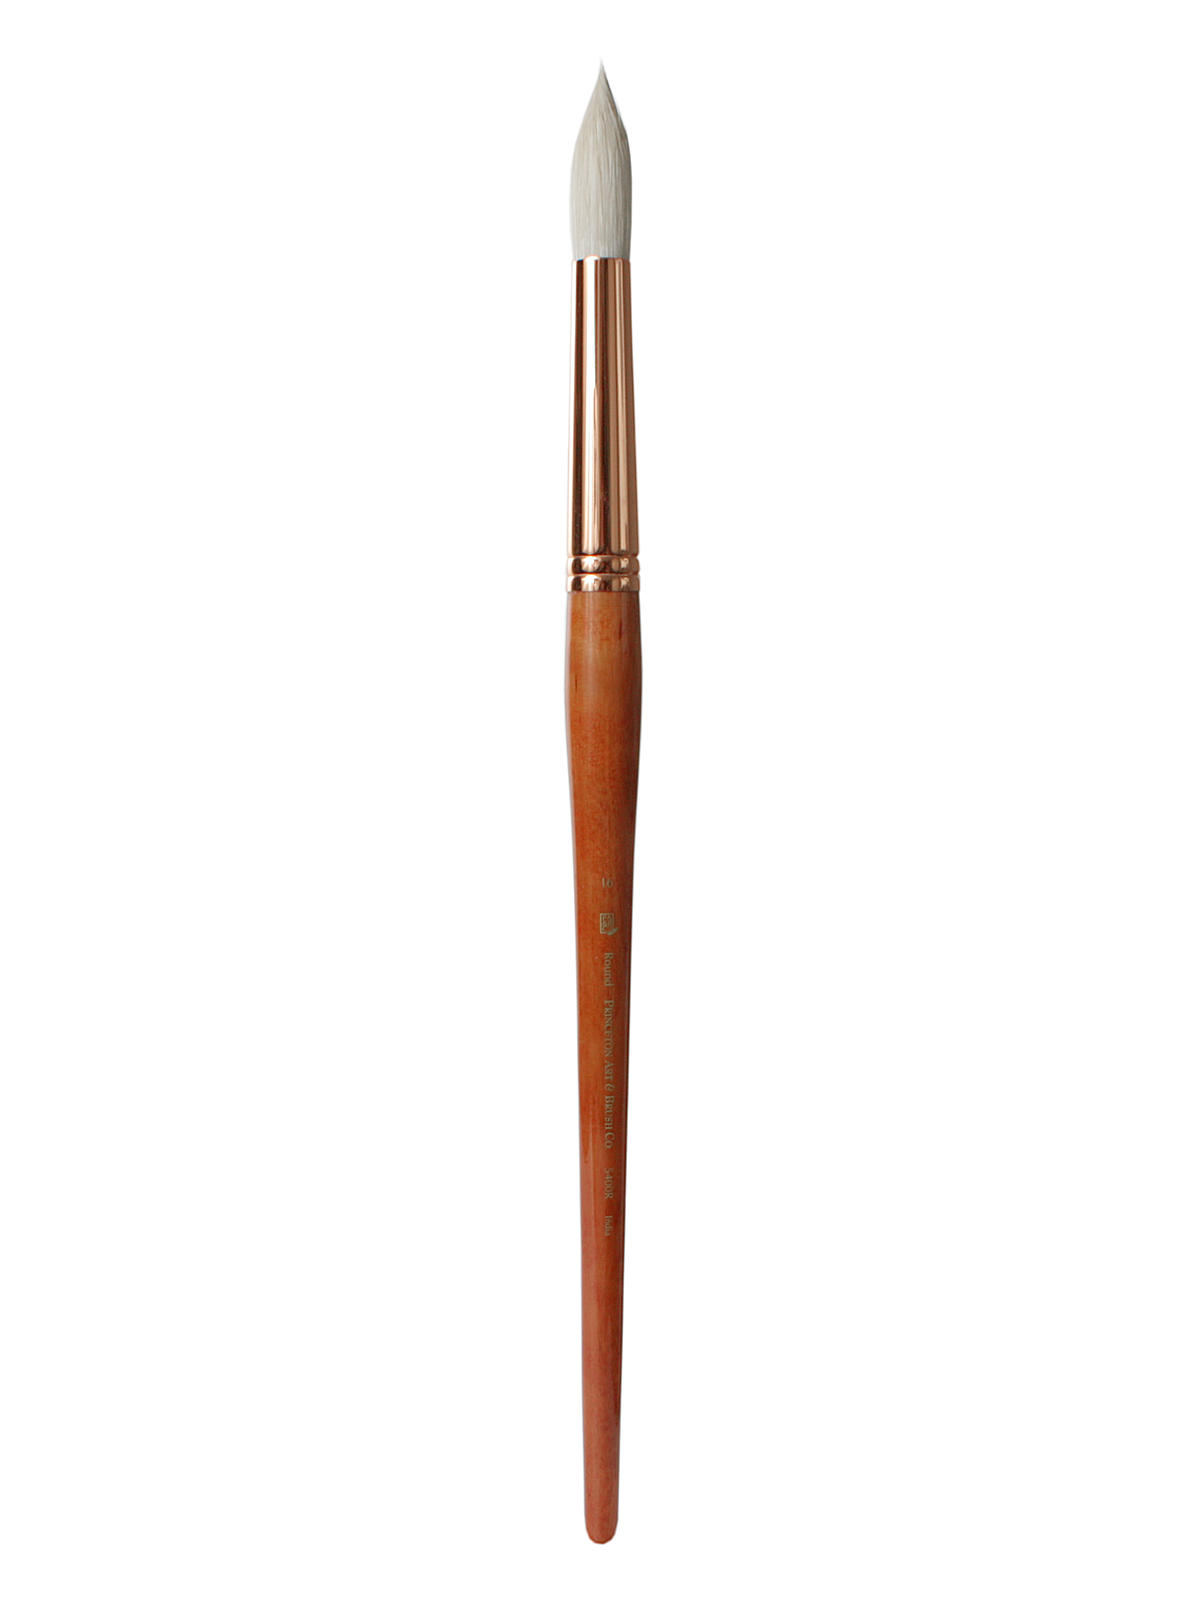 Series 5400 Refine Best Interlocked Bristle Long Handle Brushes 16 Round